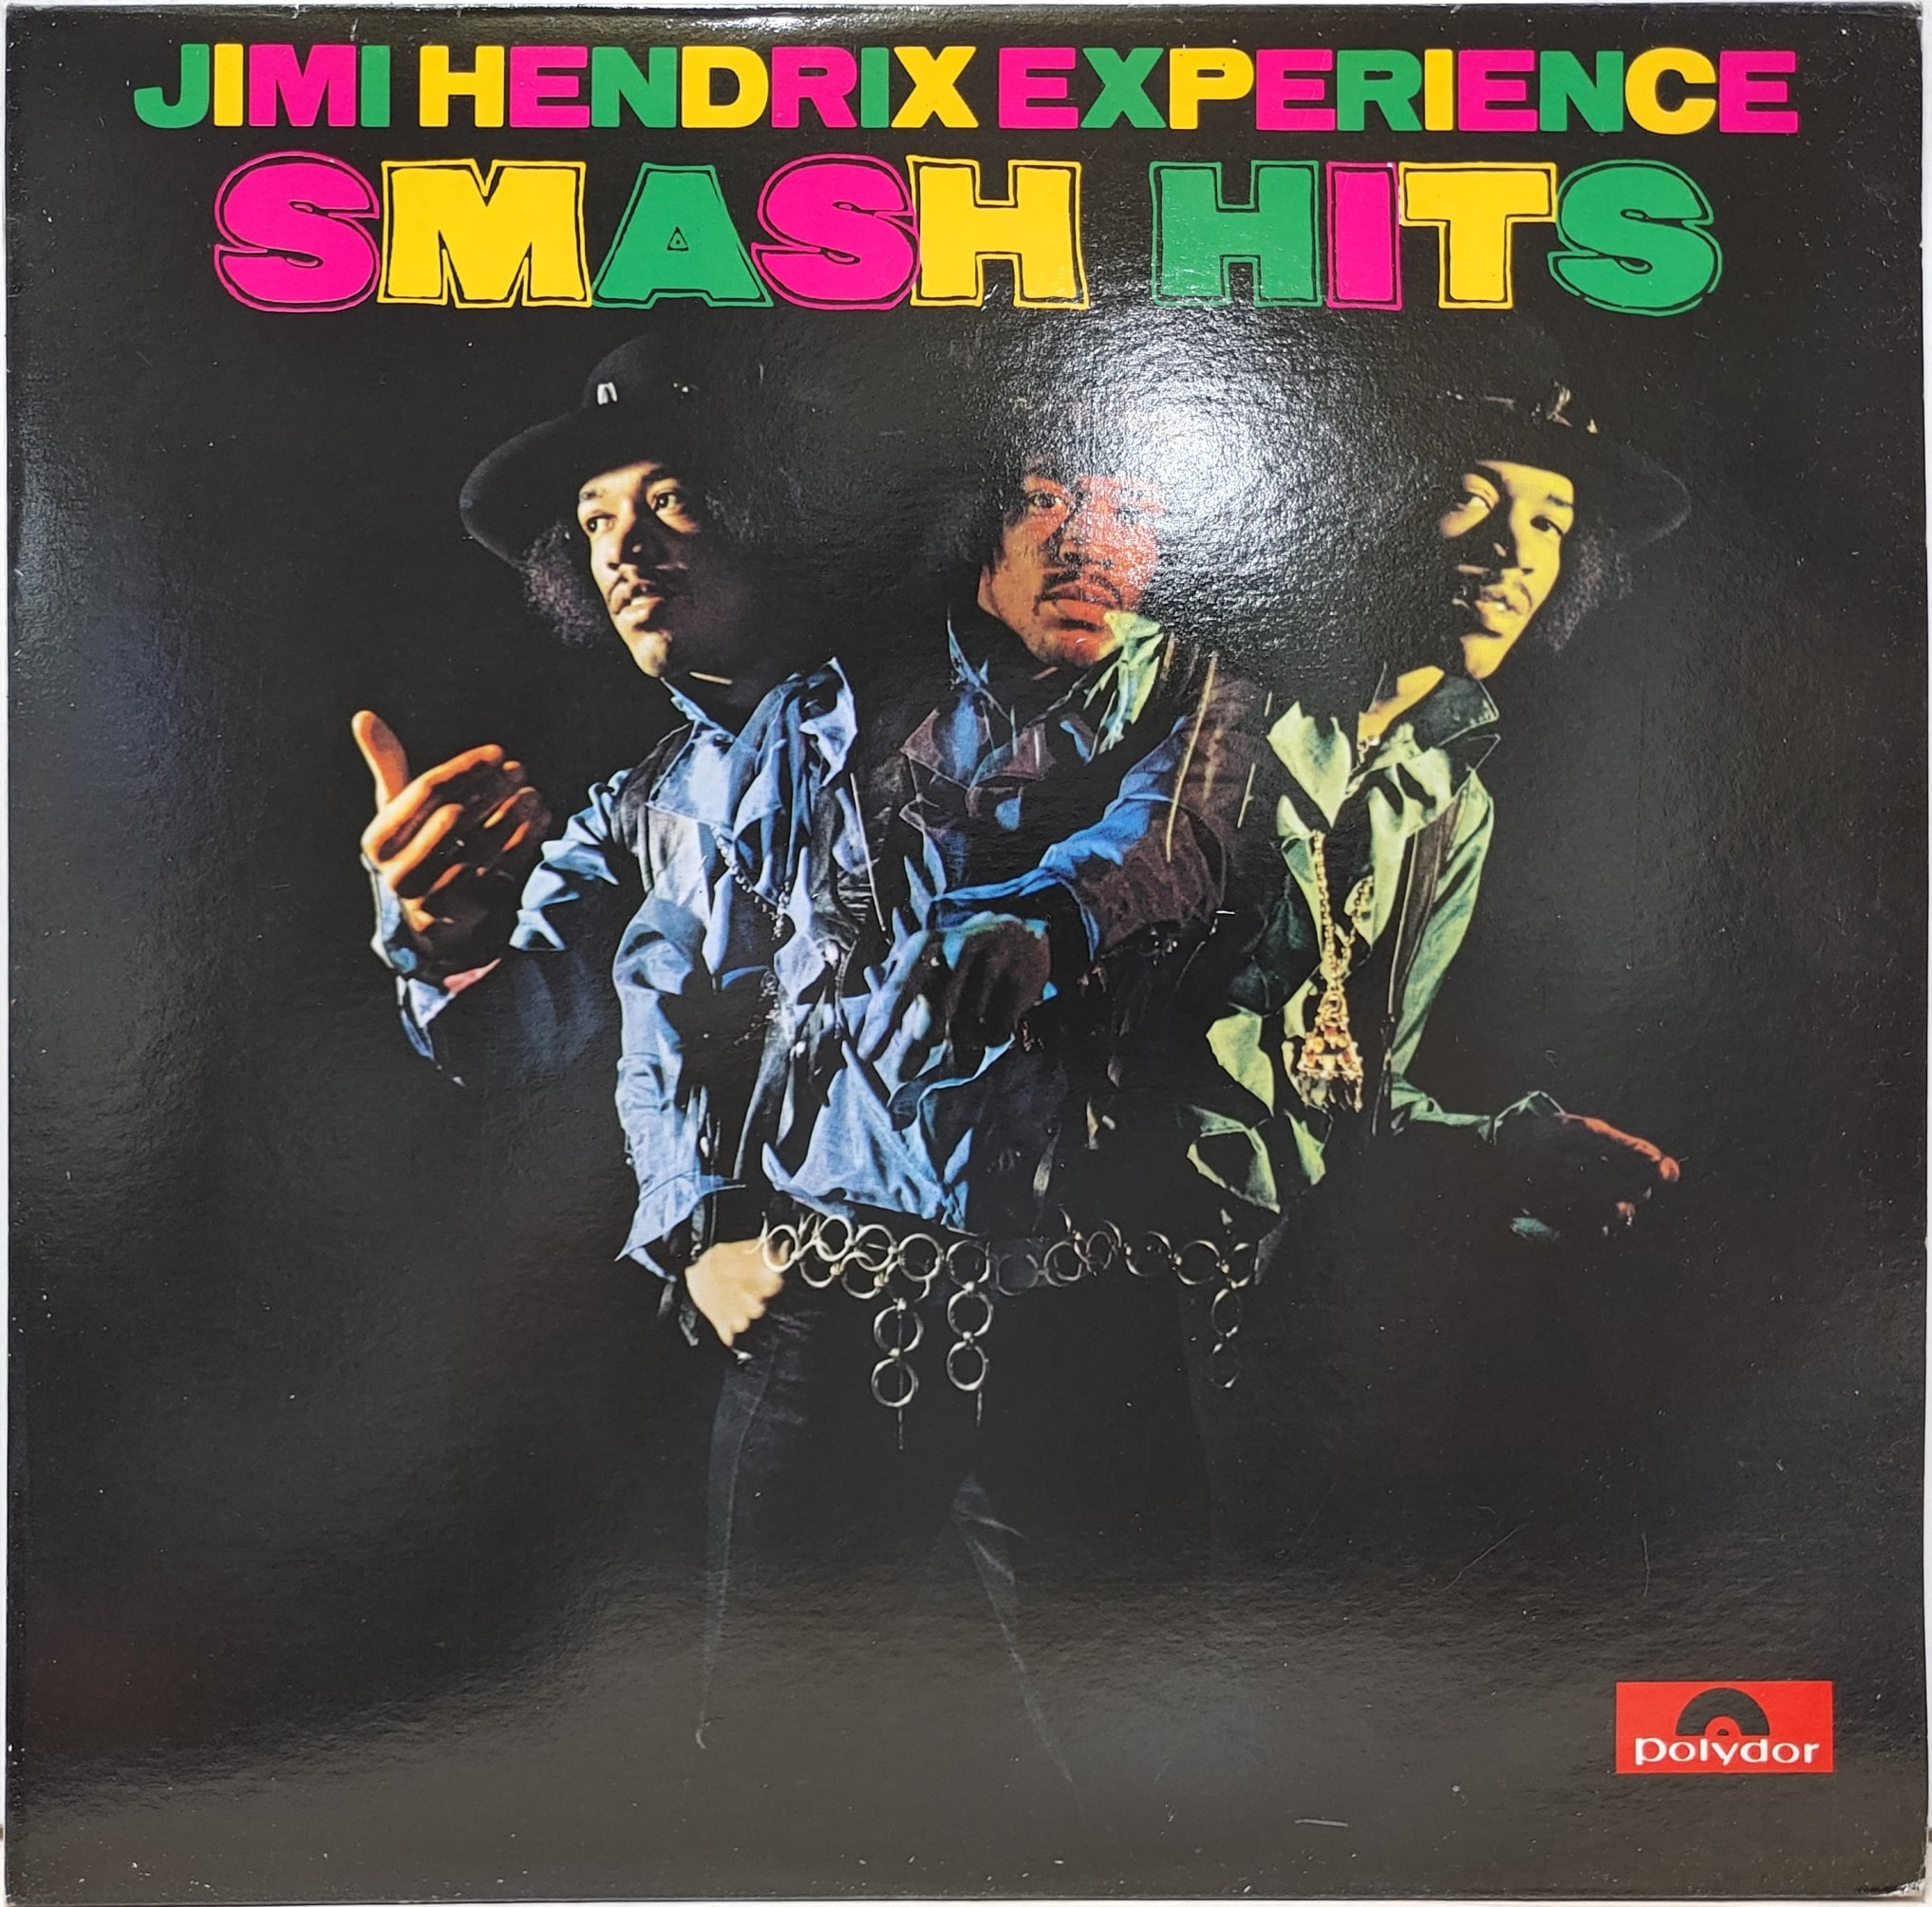 JIMI HENDRIX EXPERIENCE / SMASH HITS